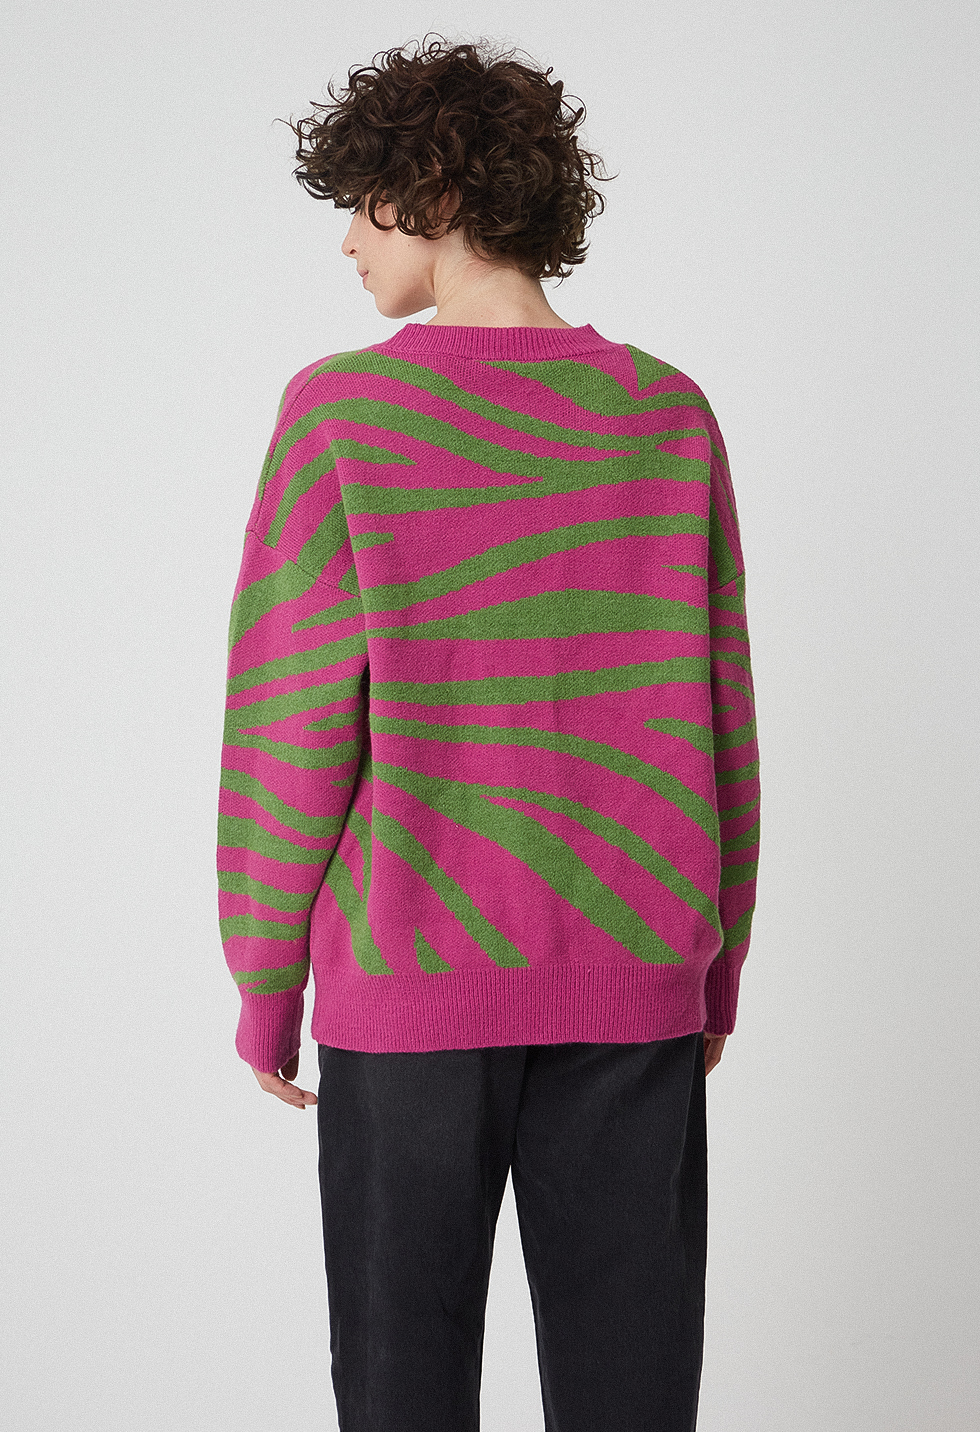 Animal print sweater